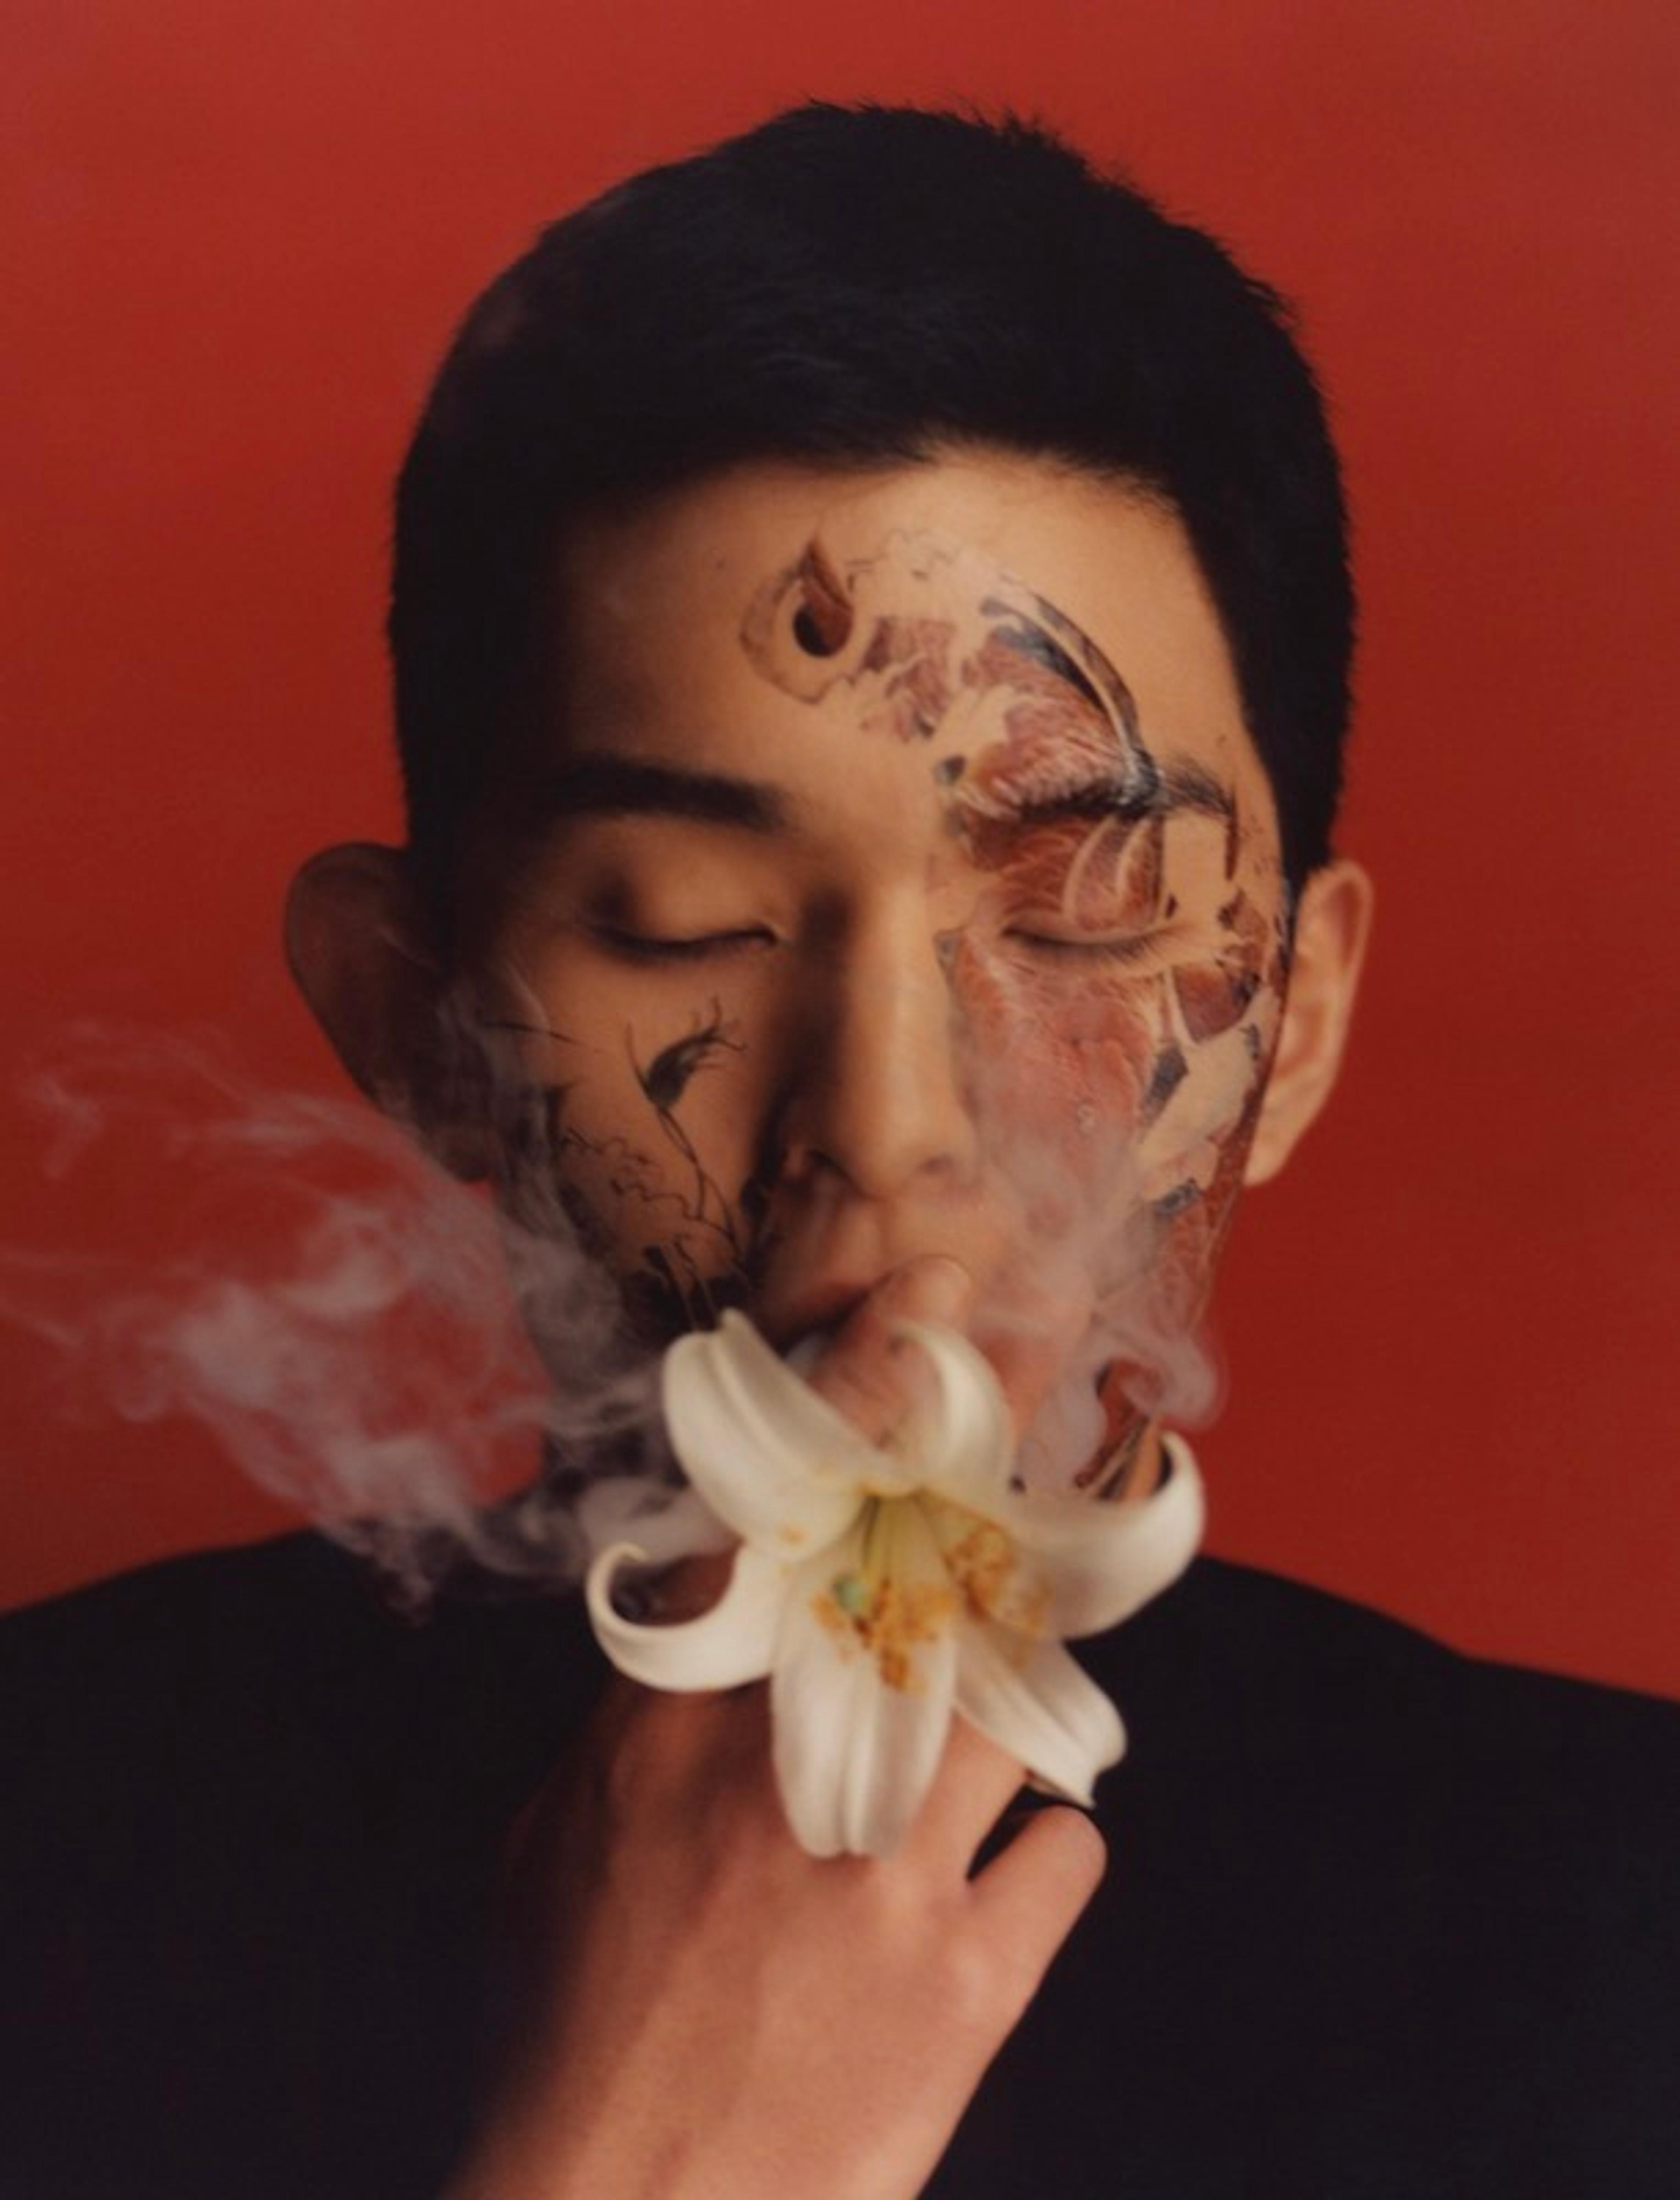 A close-up portrait of a man smoking a flower as if it were a cigarette